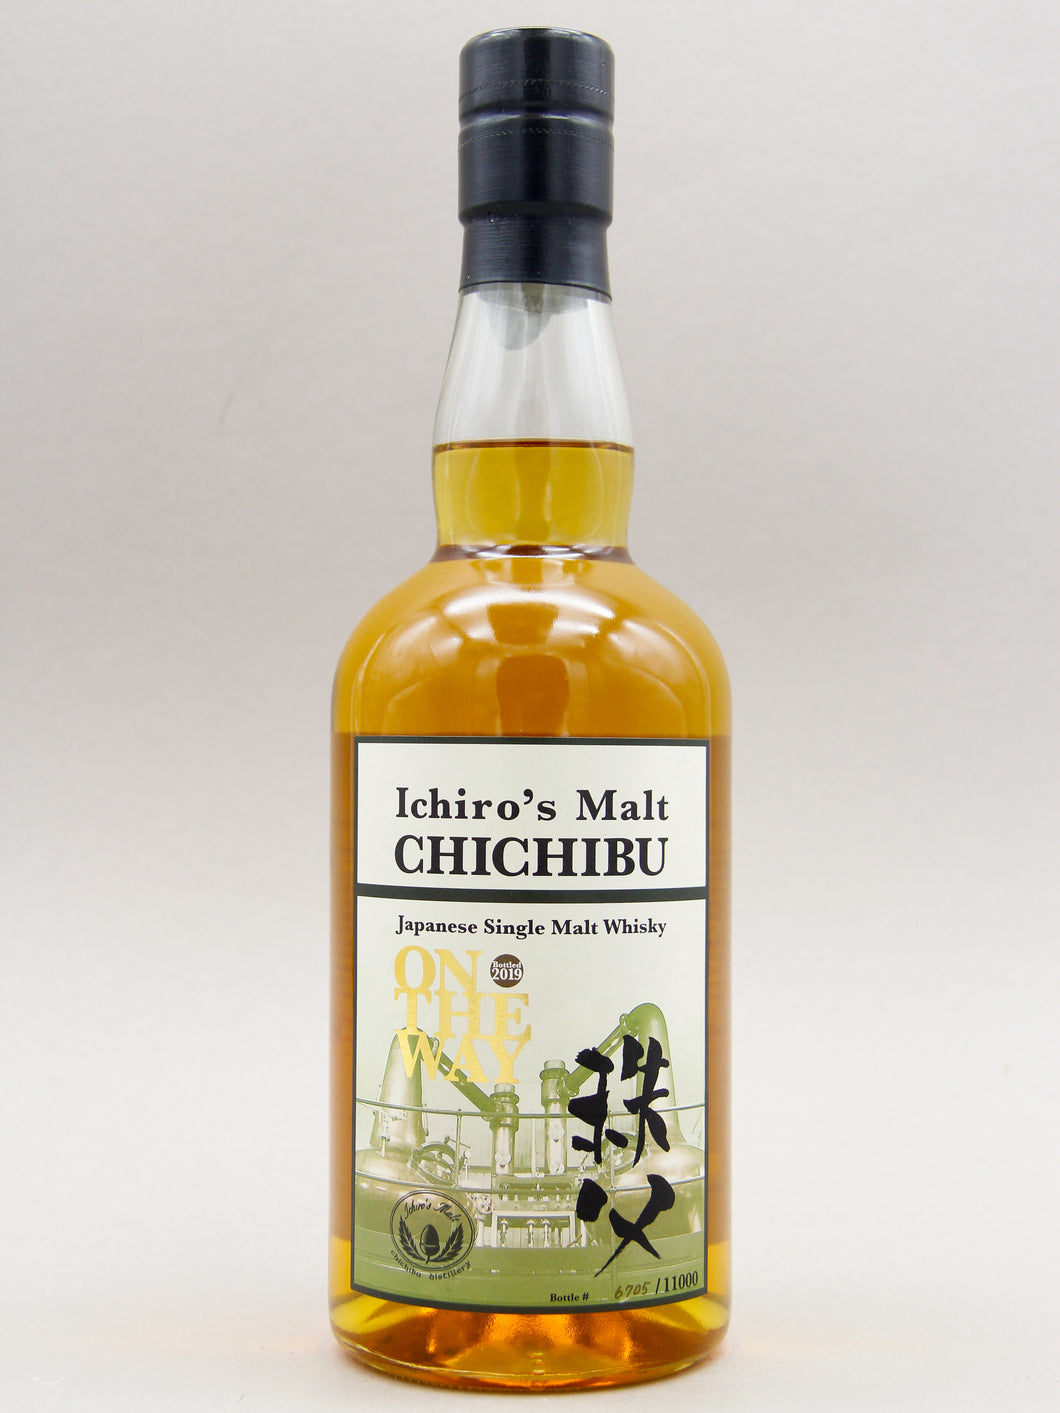 Chichibu, Ichiro's Malt, On The Way, 2019, Japan, Single Malt Whisky (51.5%, 70cl)